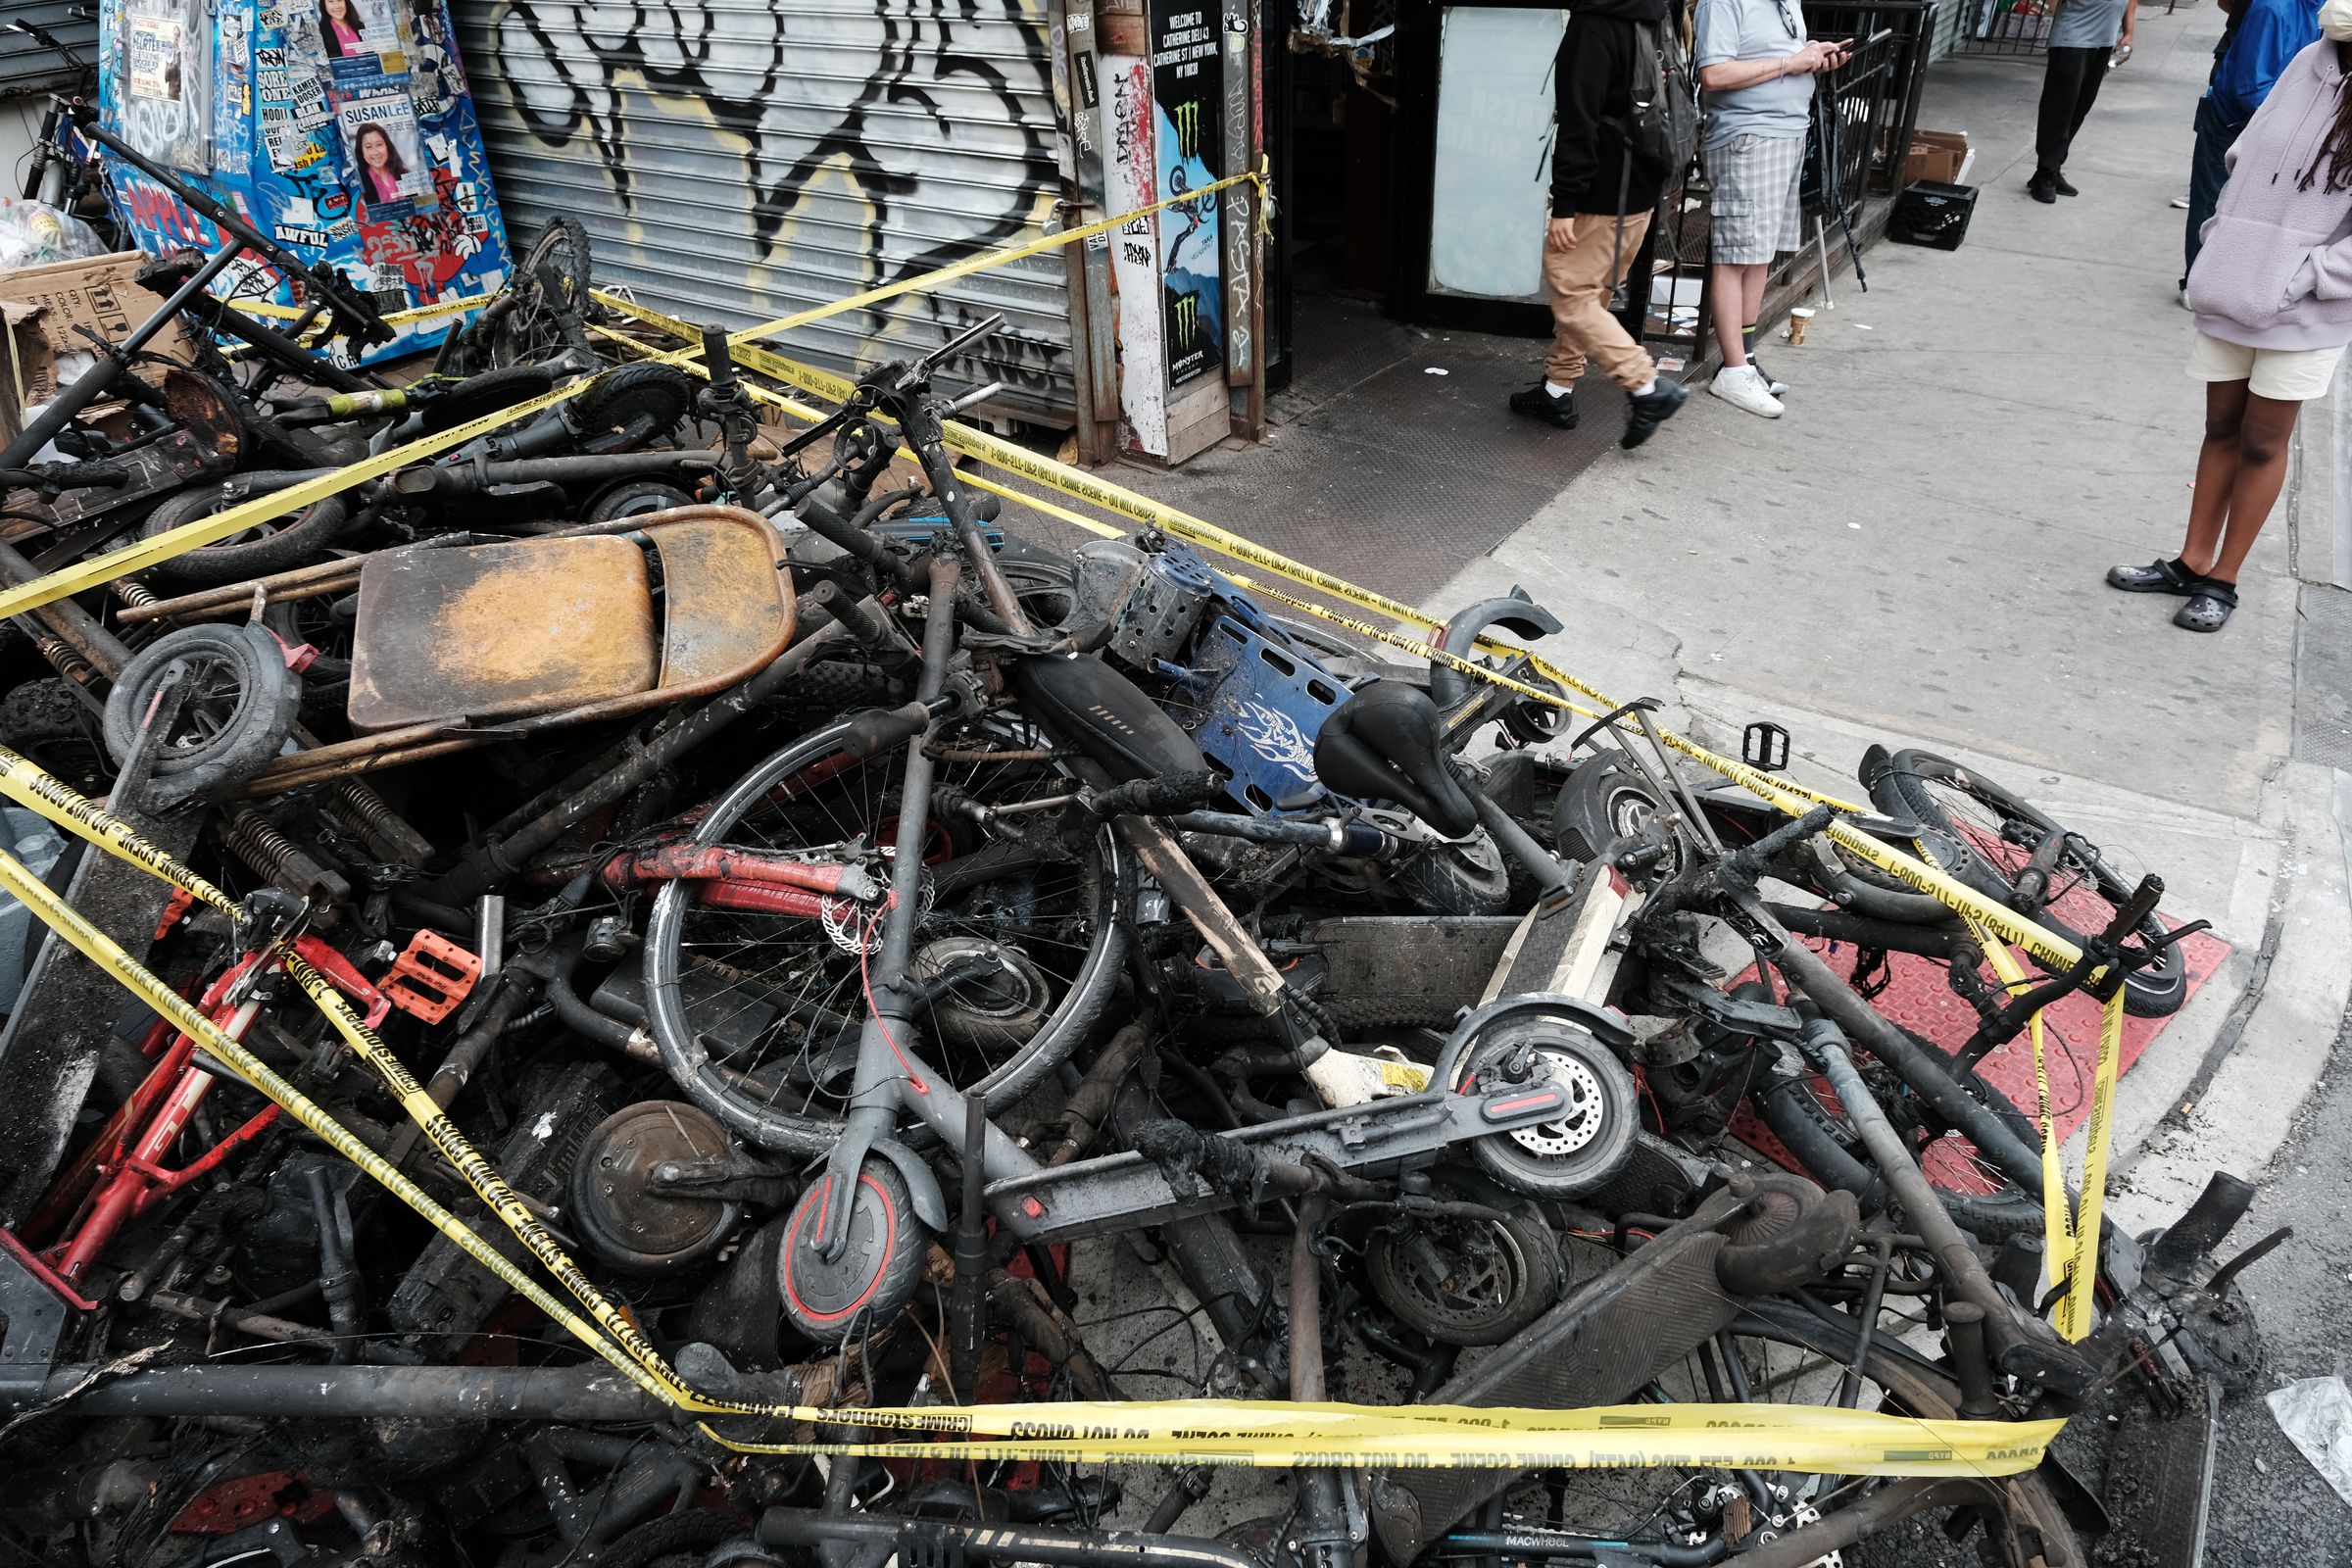 Fire At E-Bike Shop In Lower Manhattan Kills 4 People